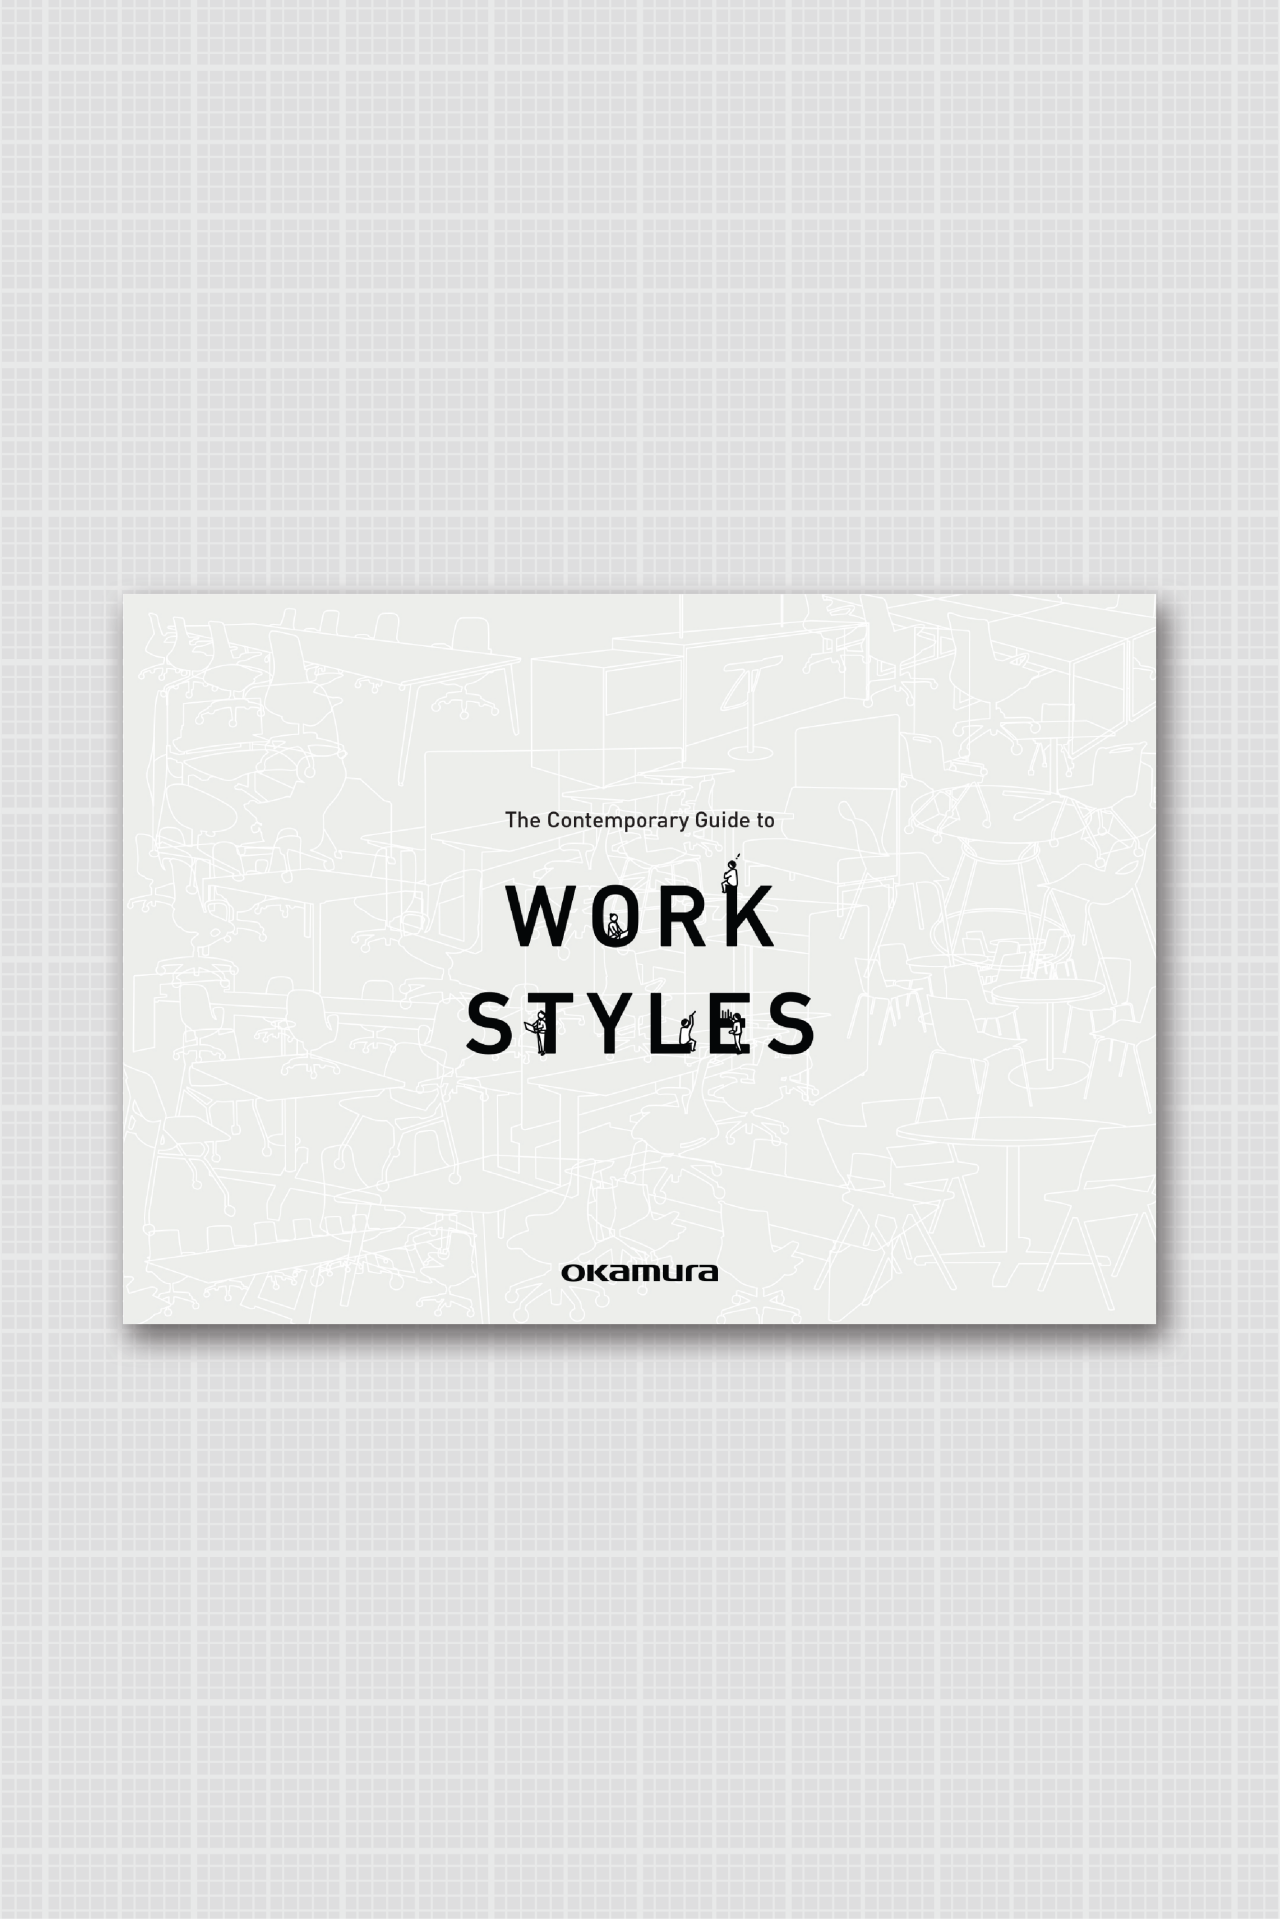 Works Styles